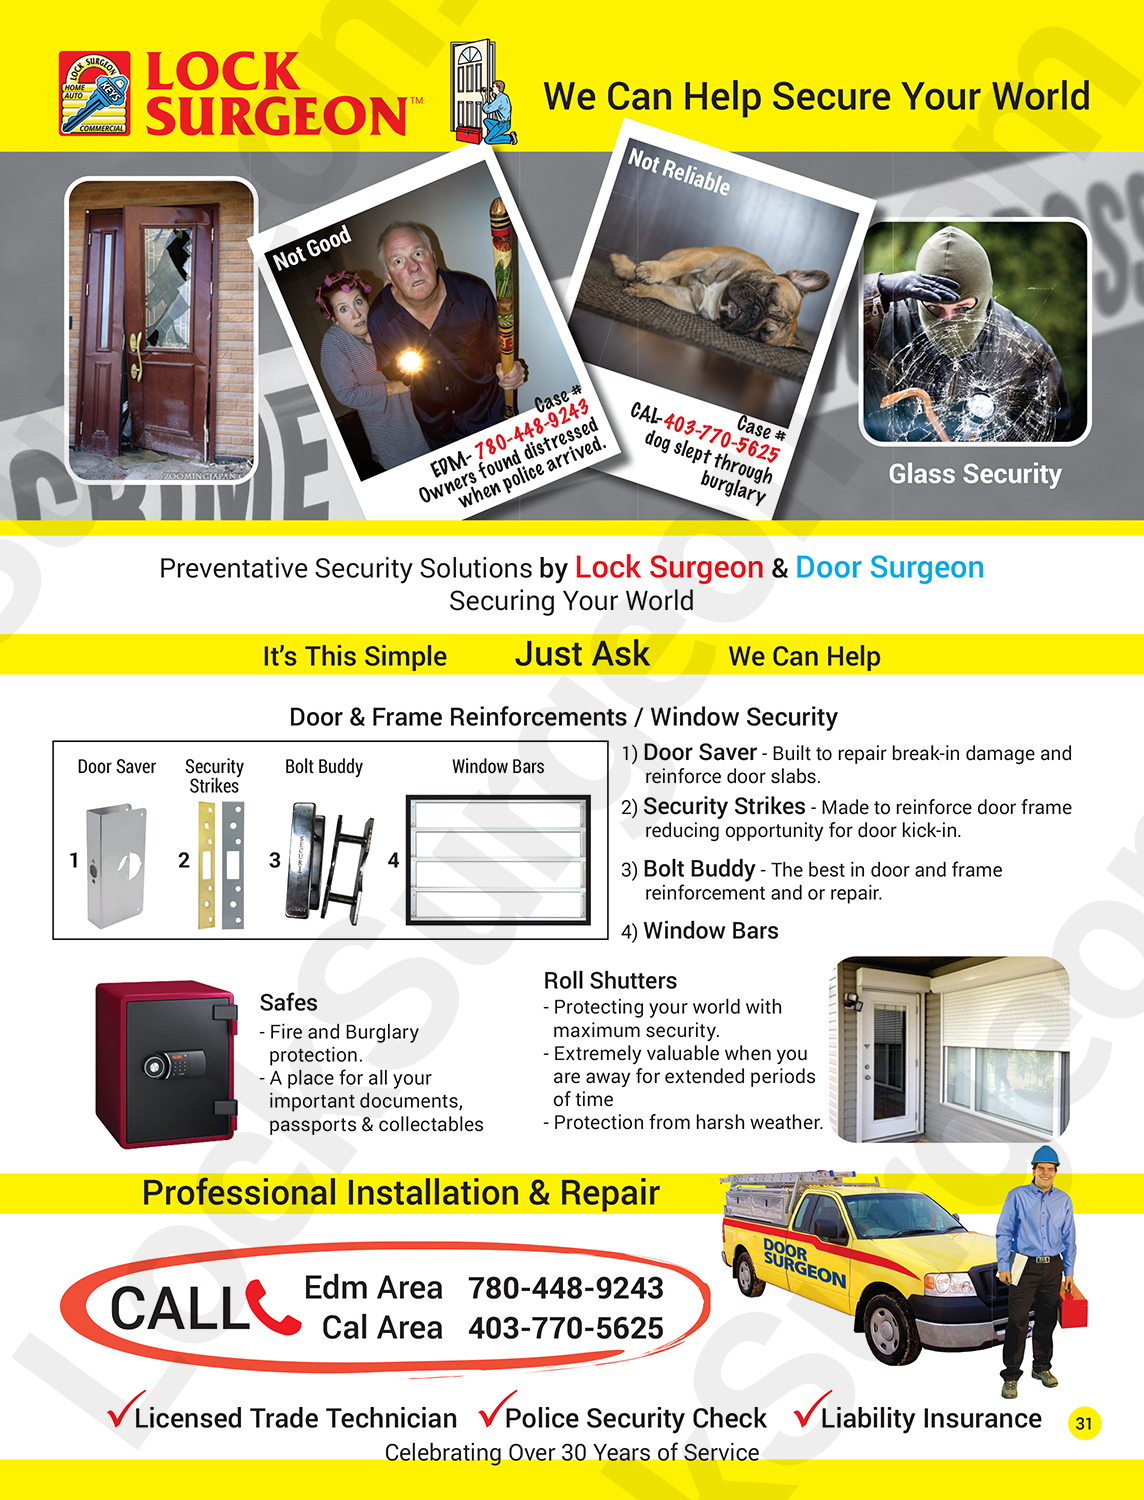 Lock Surgeon preventative security solutions door savers security strikes bolt buddies window bars.